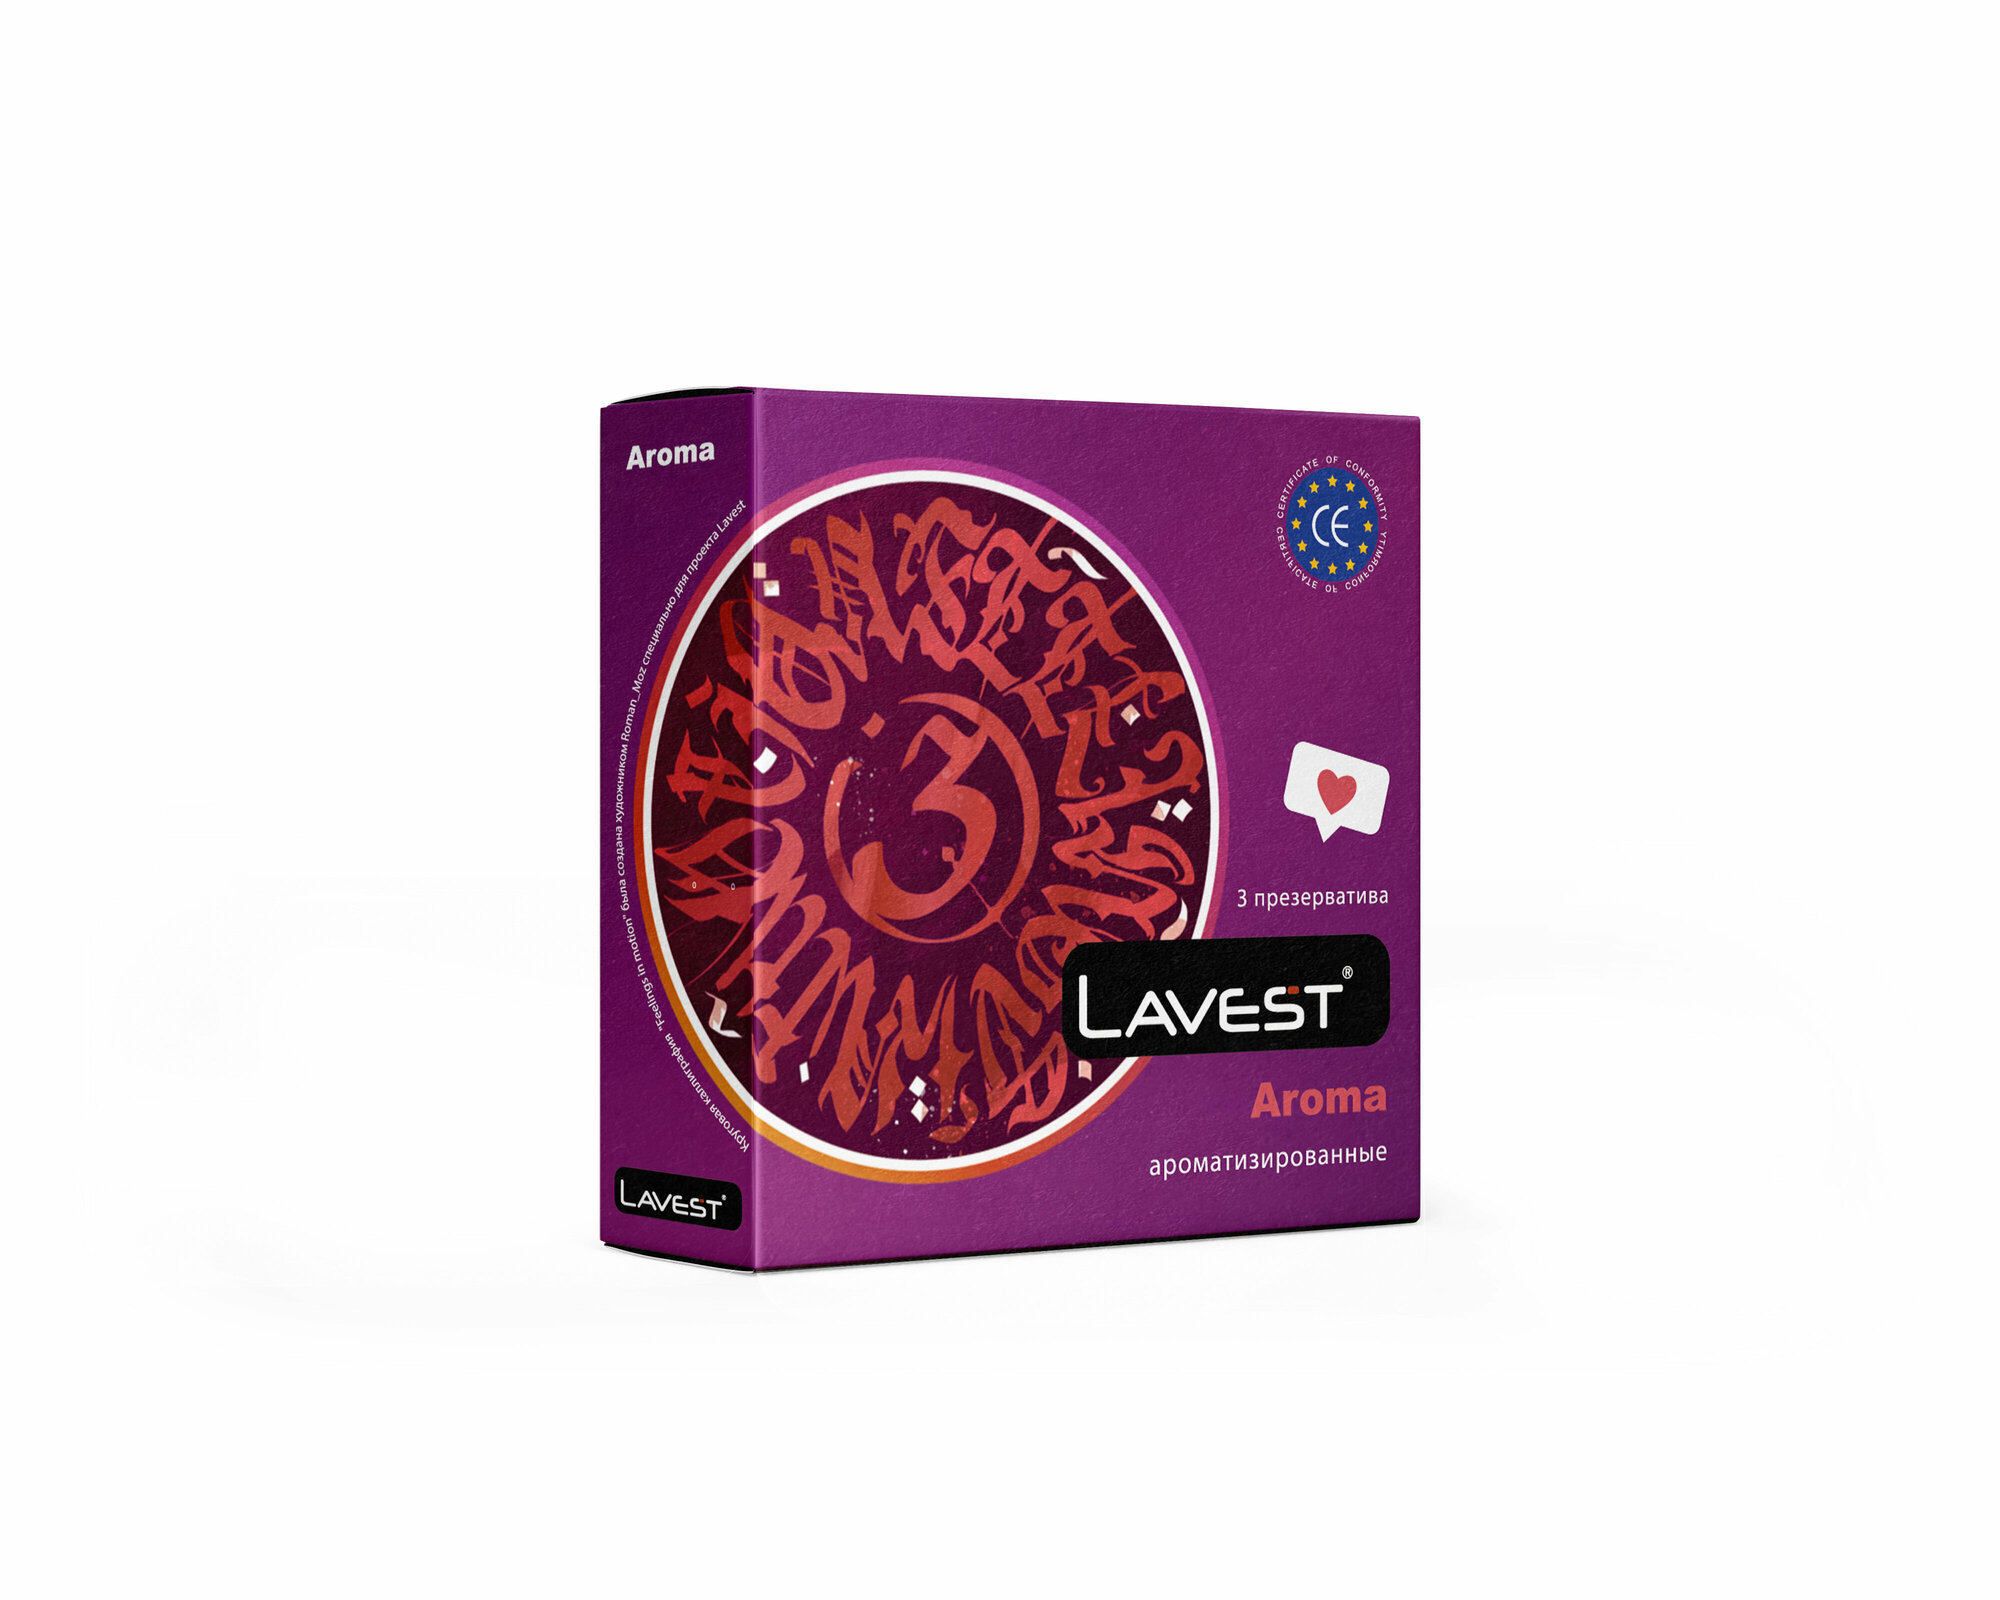 Lavest Aroma ароматизированные презервативы 3 шт